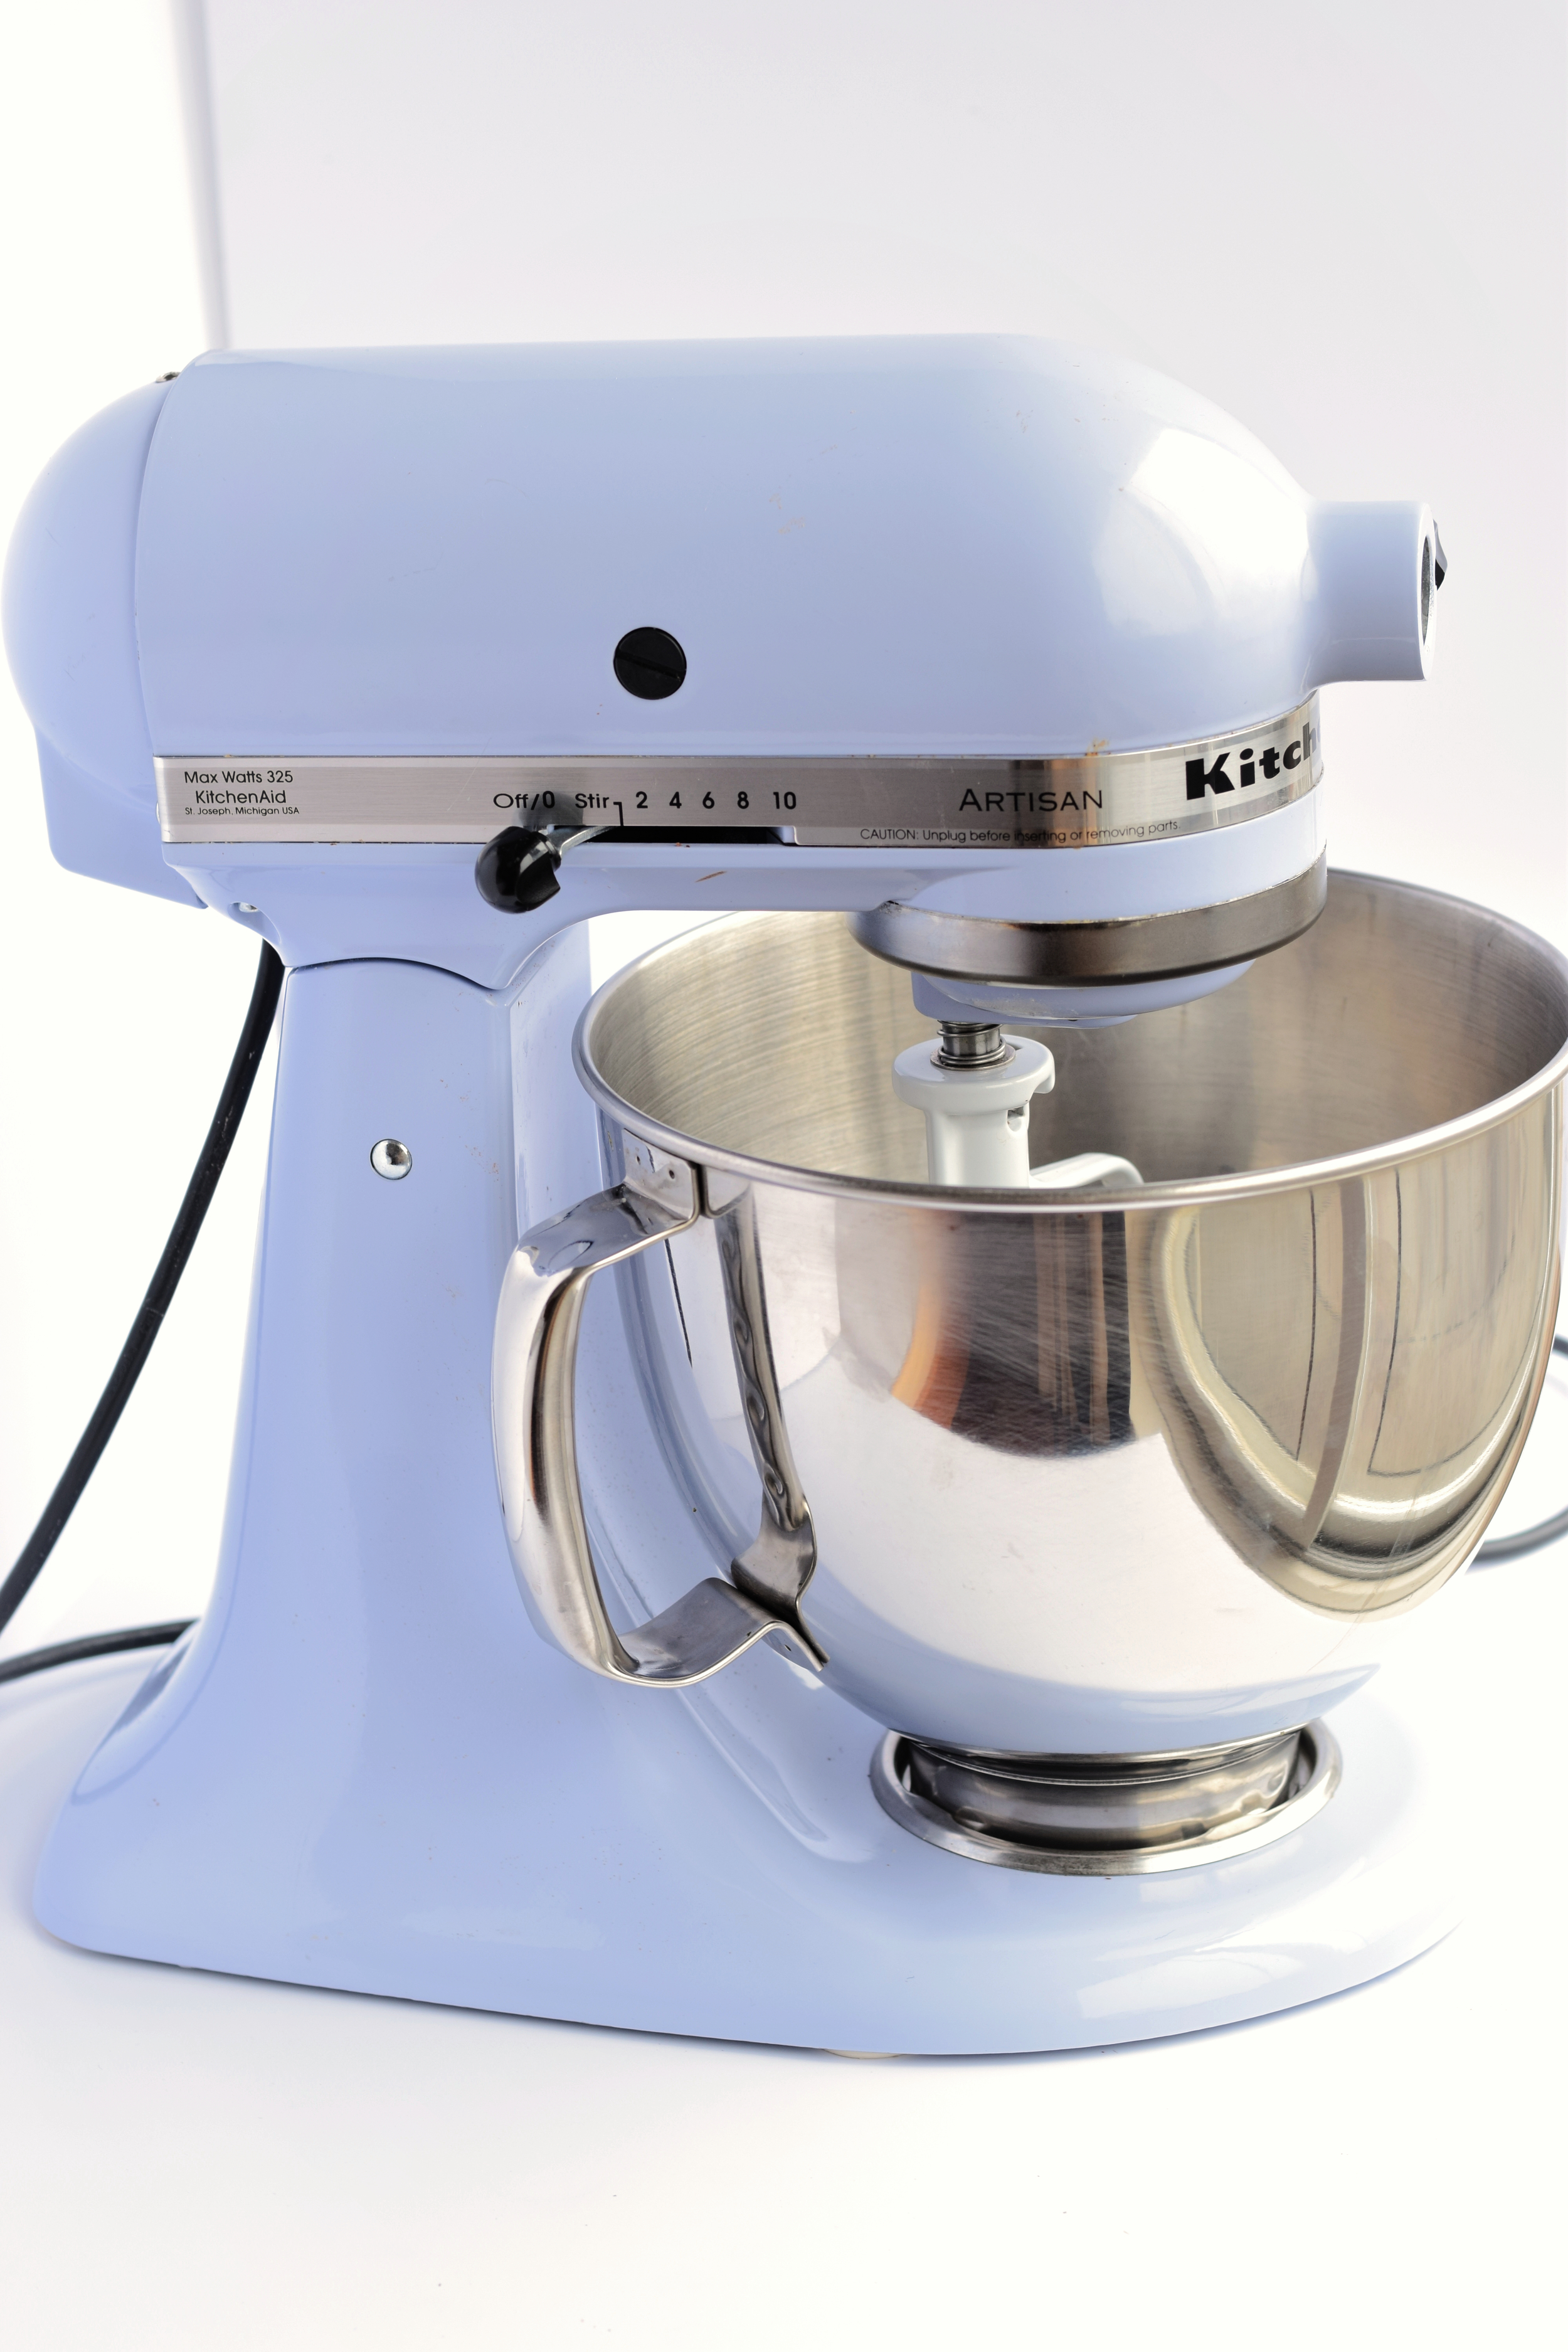 10 Cool Baking Tools and Equipment - Fun Baking Supplies—